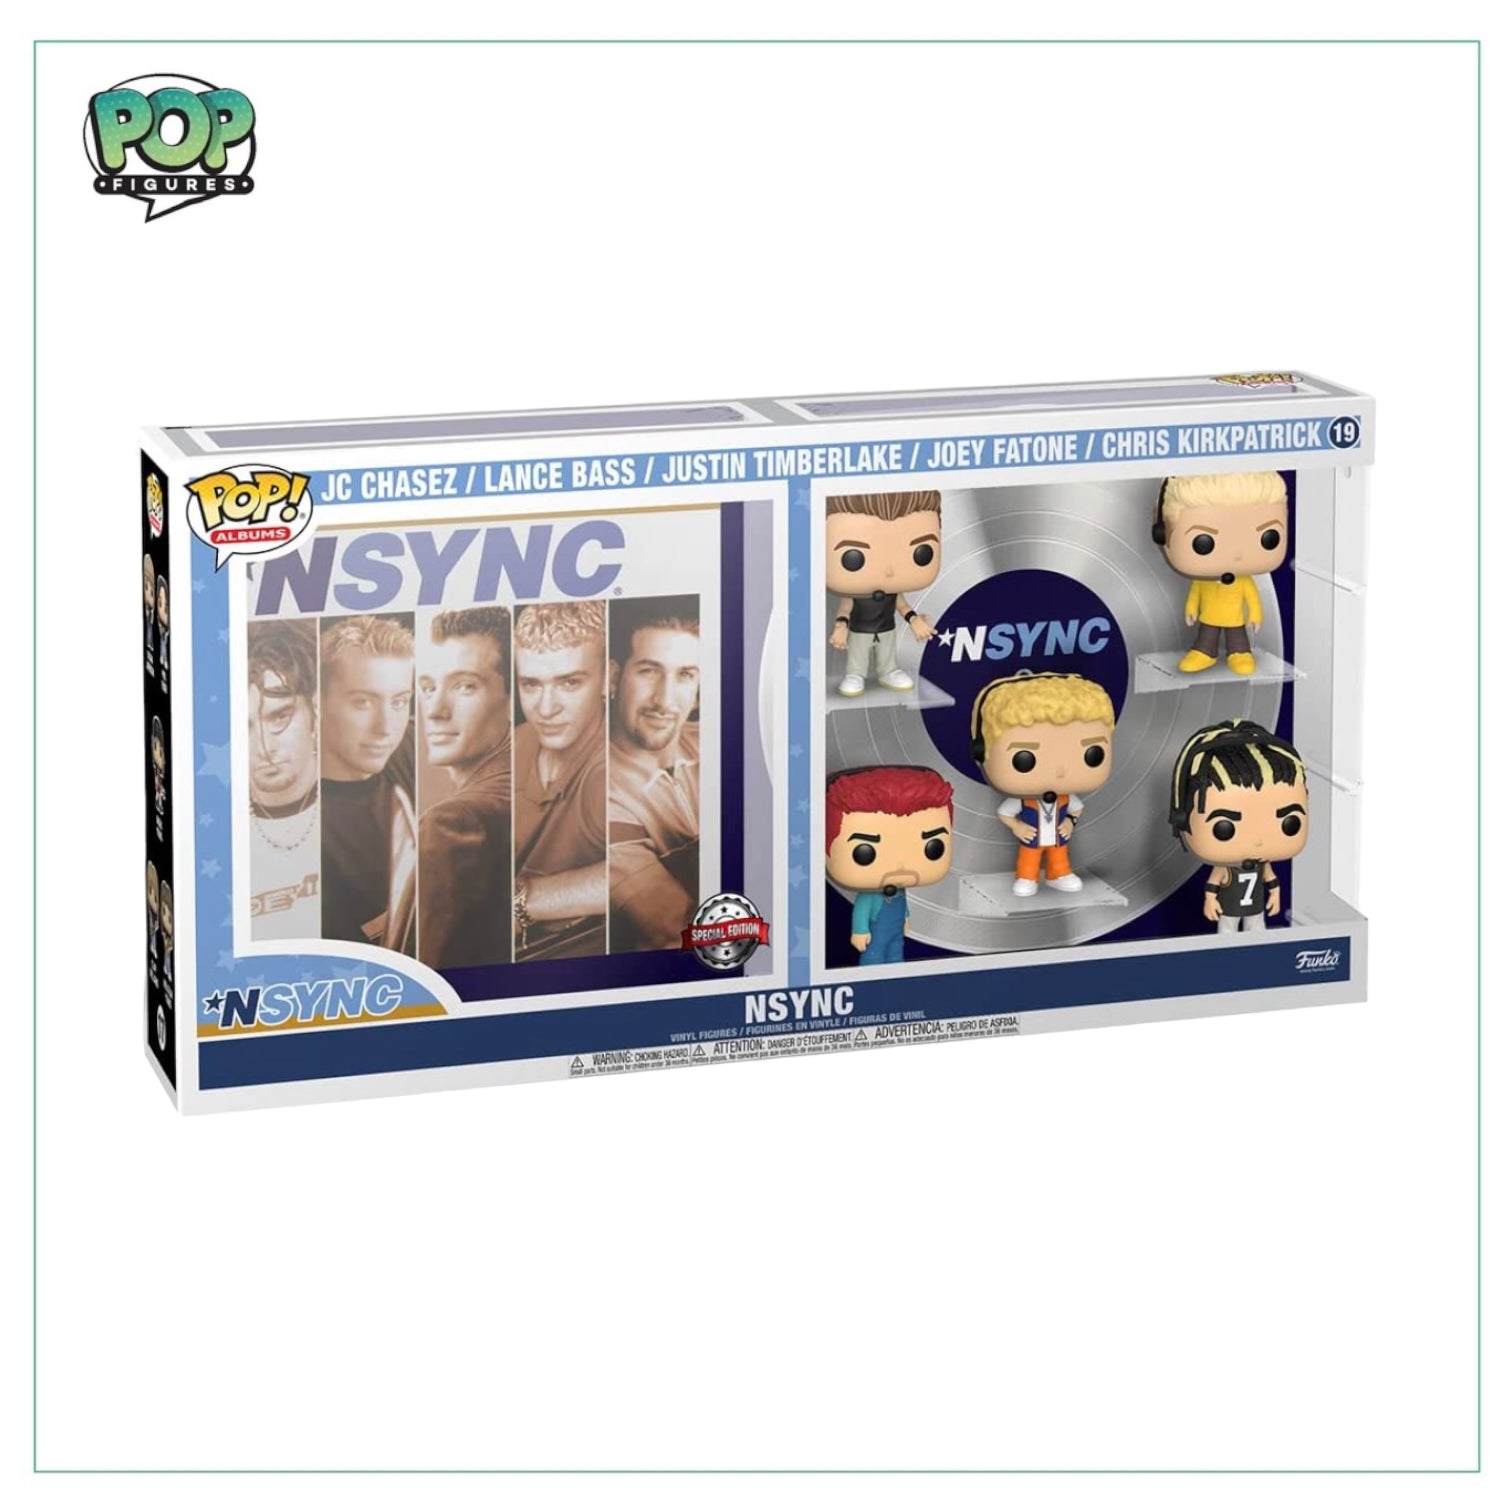 NSYNC #19 Deluxe Vinyl Album! - NSYNC - Special Edition